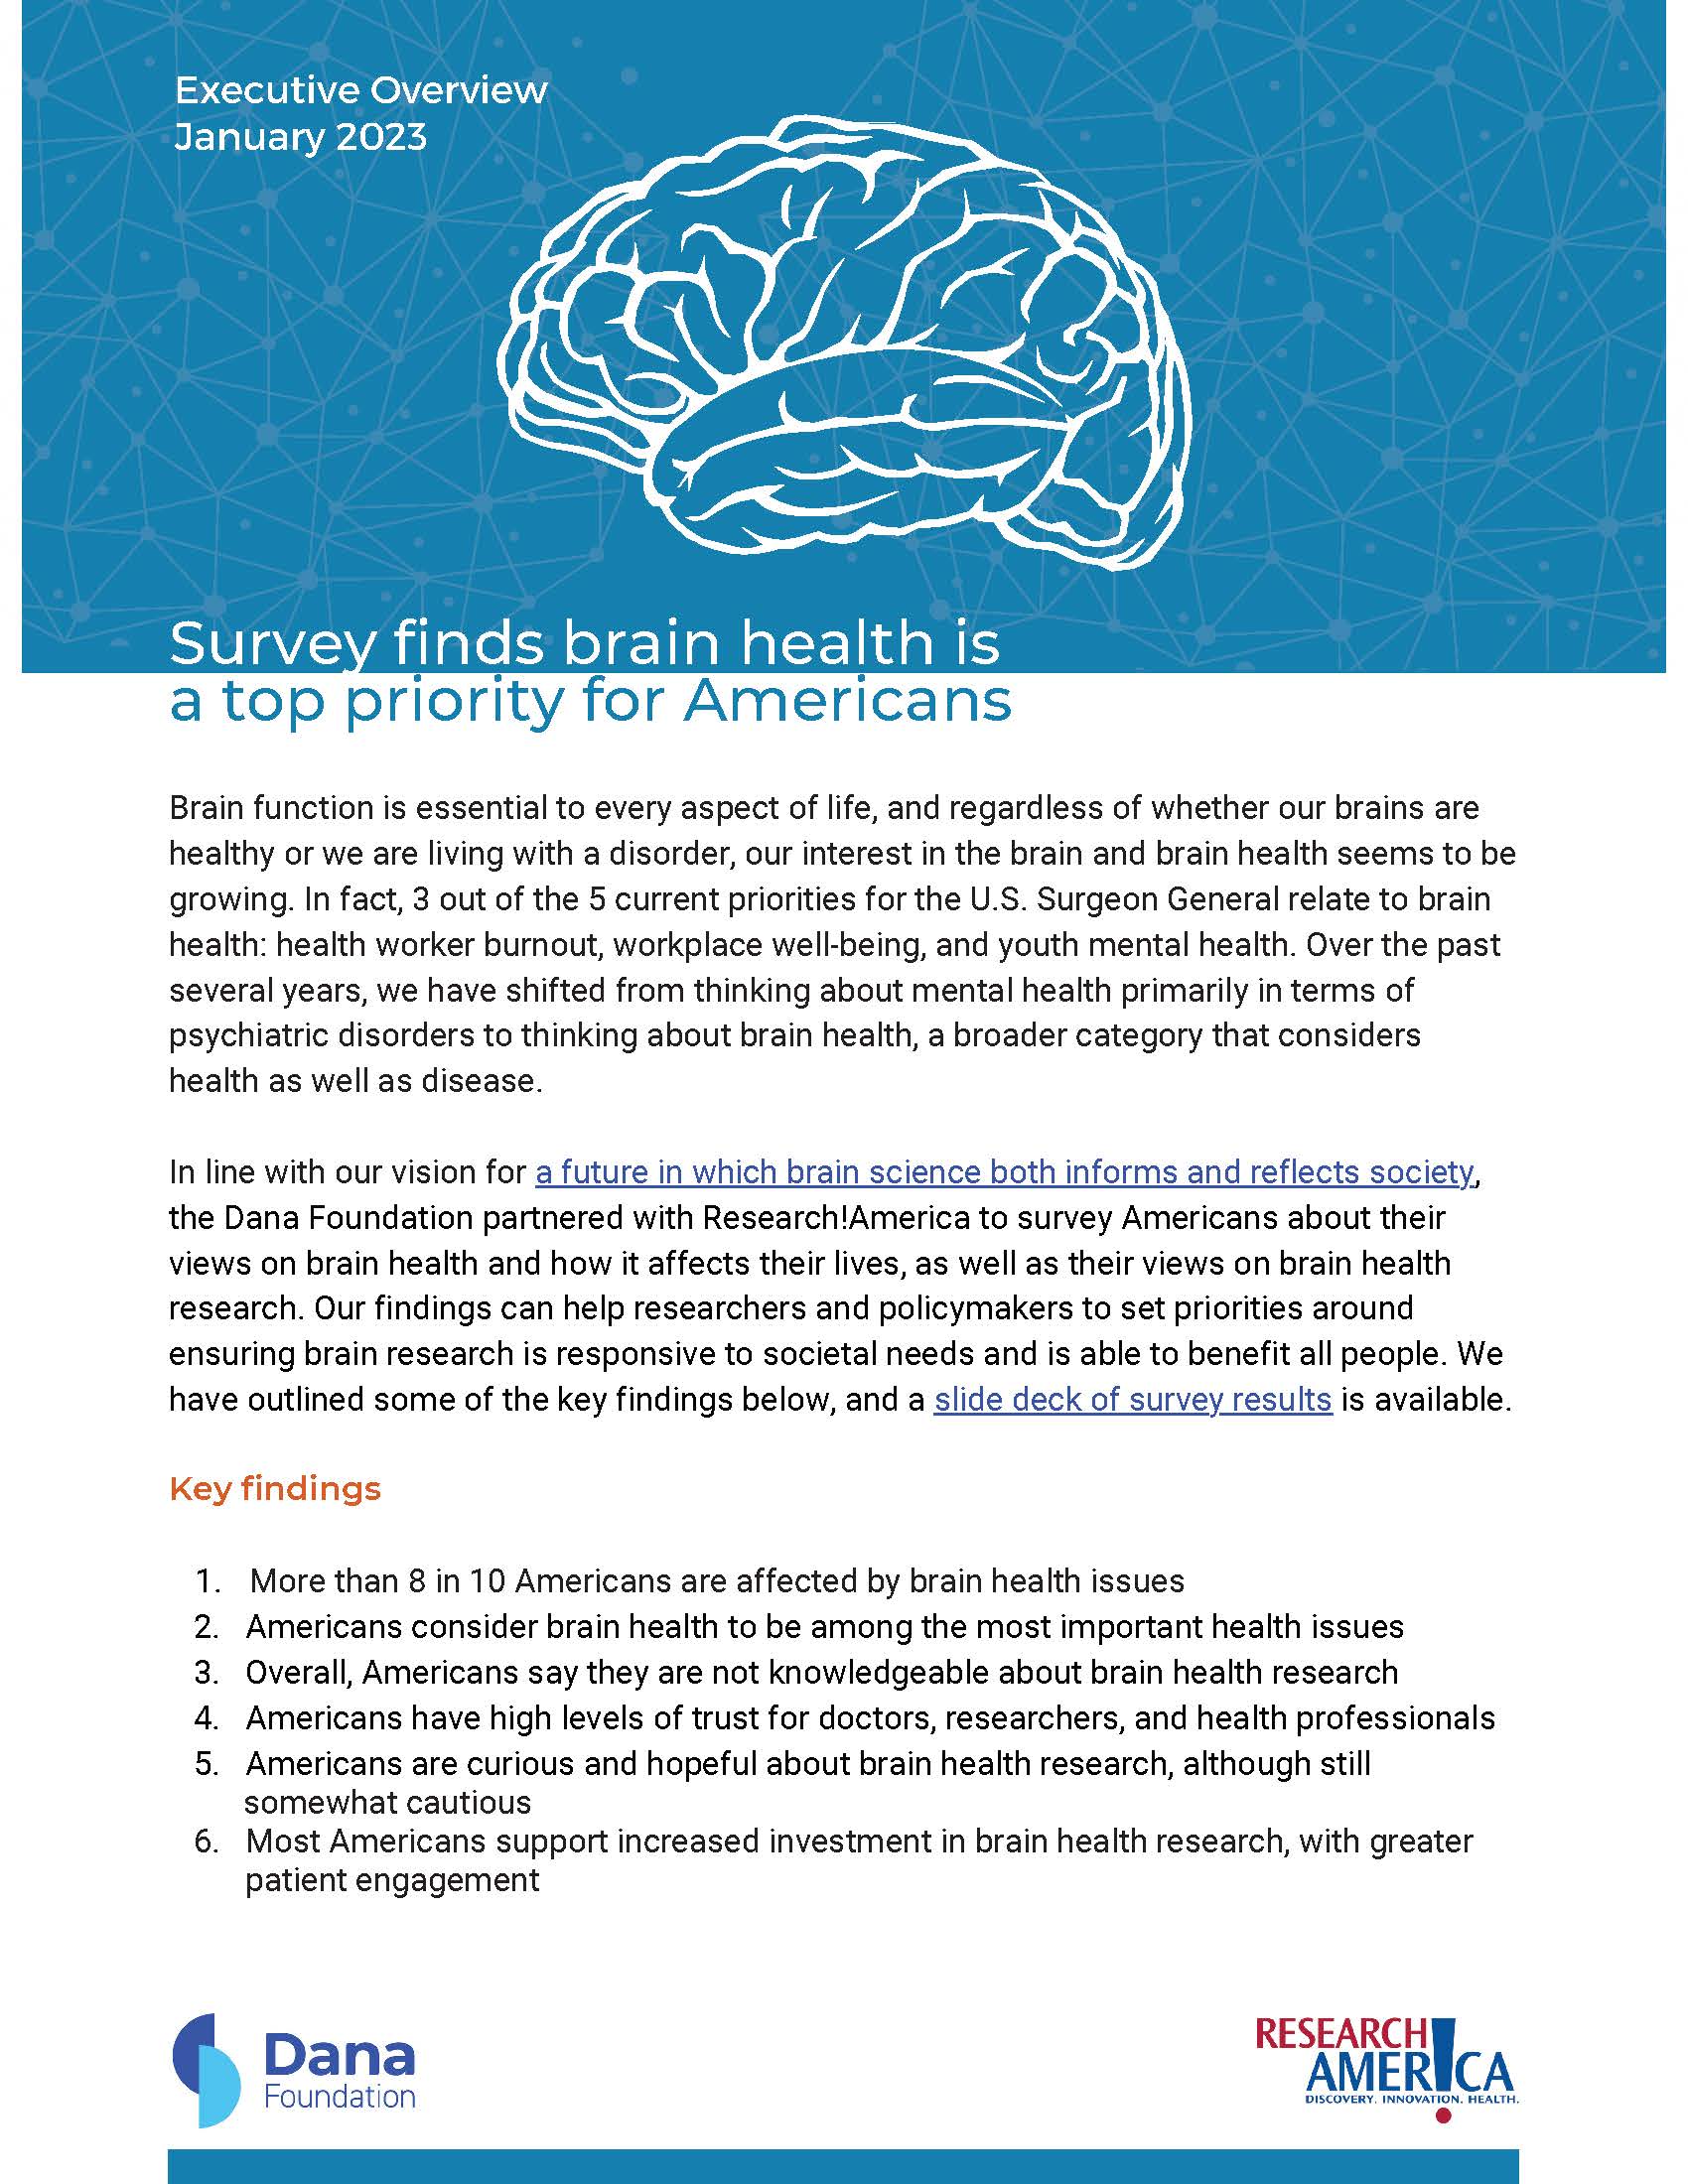 https://dana.org/app/uploads/2023/01/2022-Dana-Foundation-Brain-Health-Survey-Executive-Overview.jpg